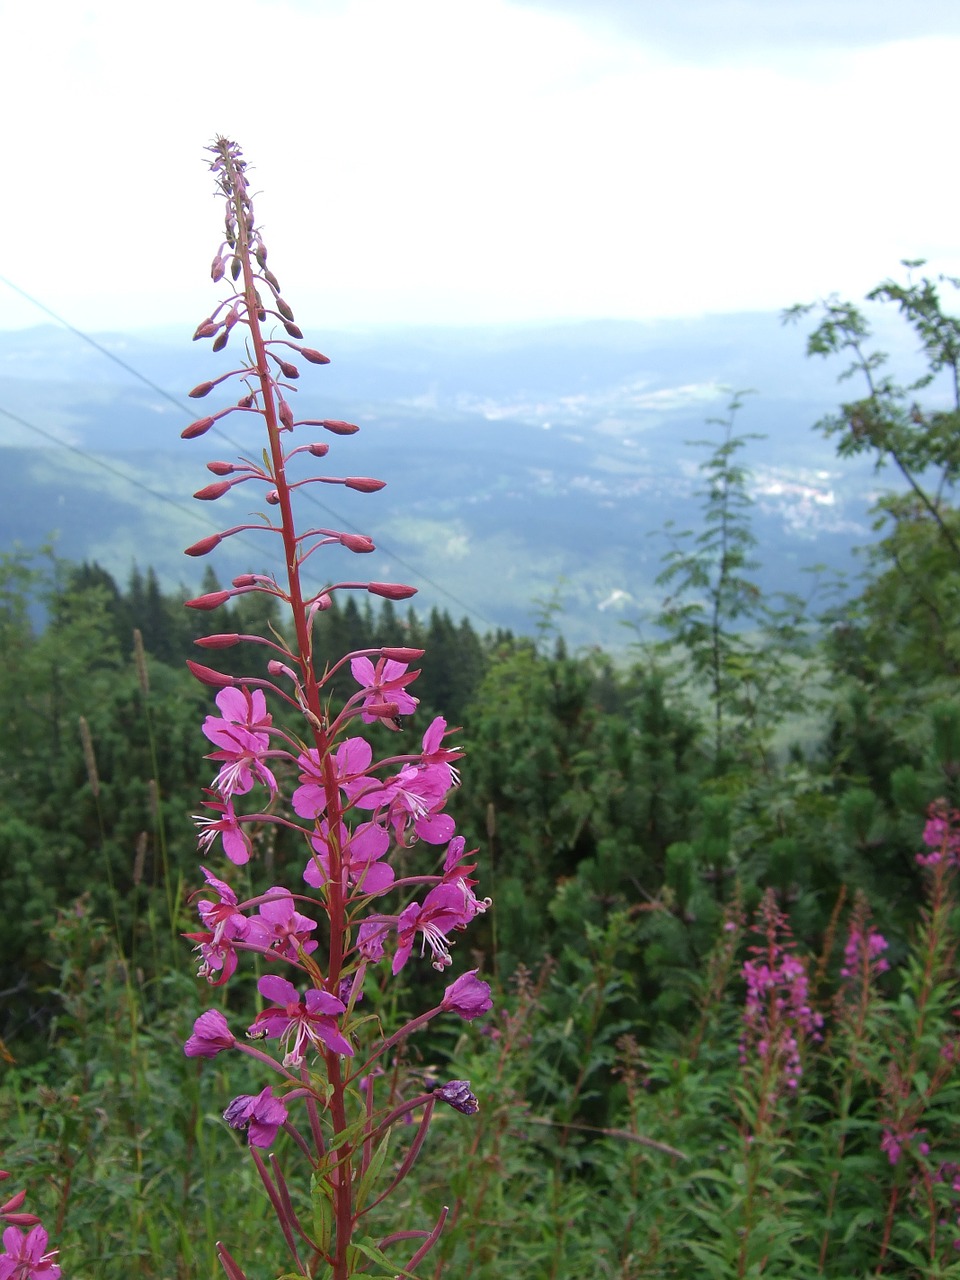 epilobium bavarian forest plant free photo